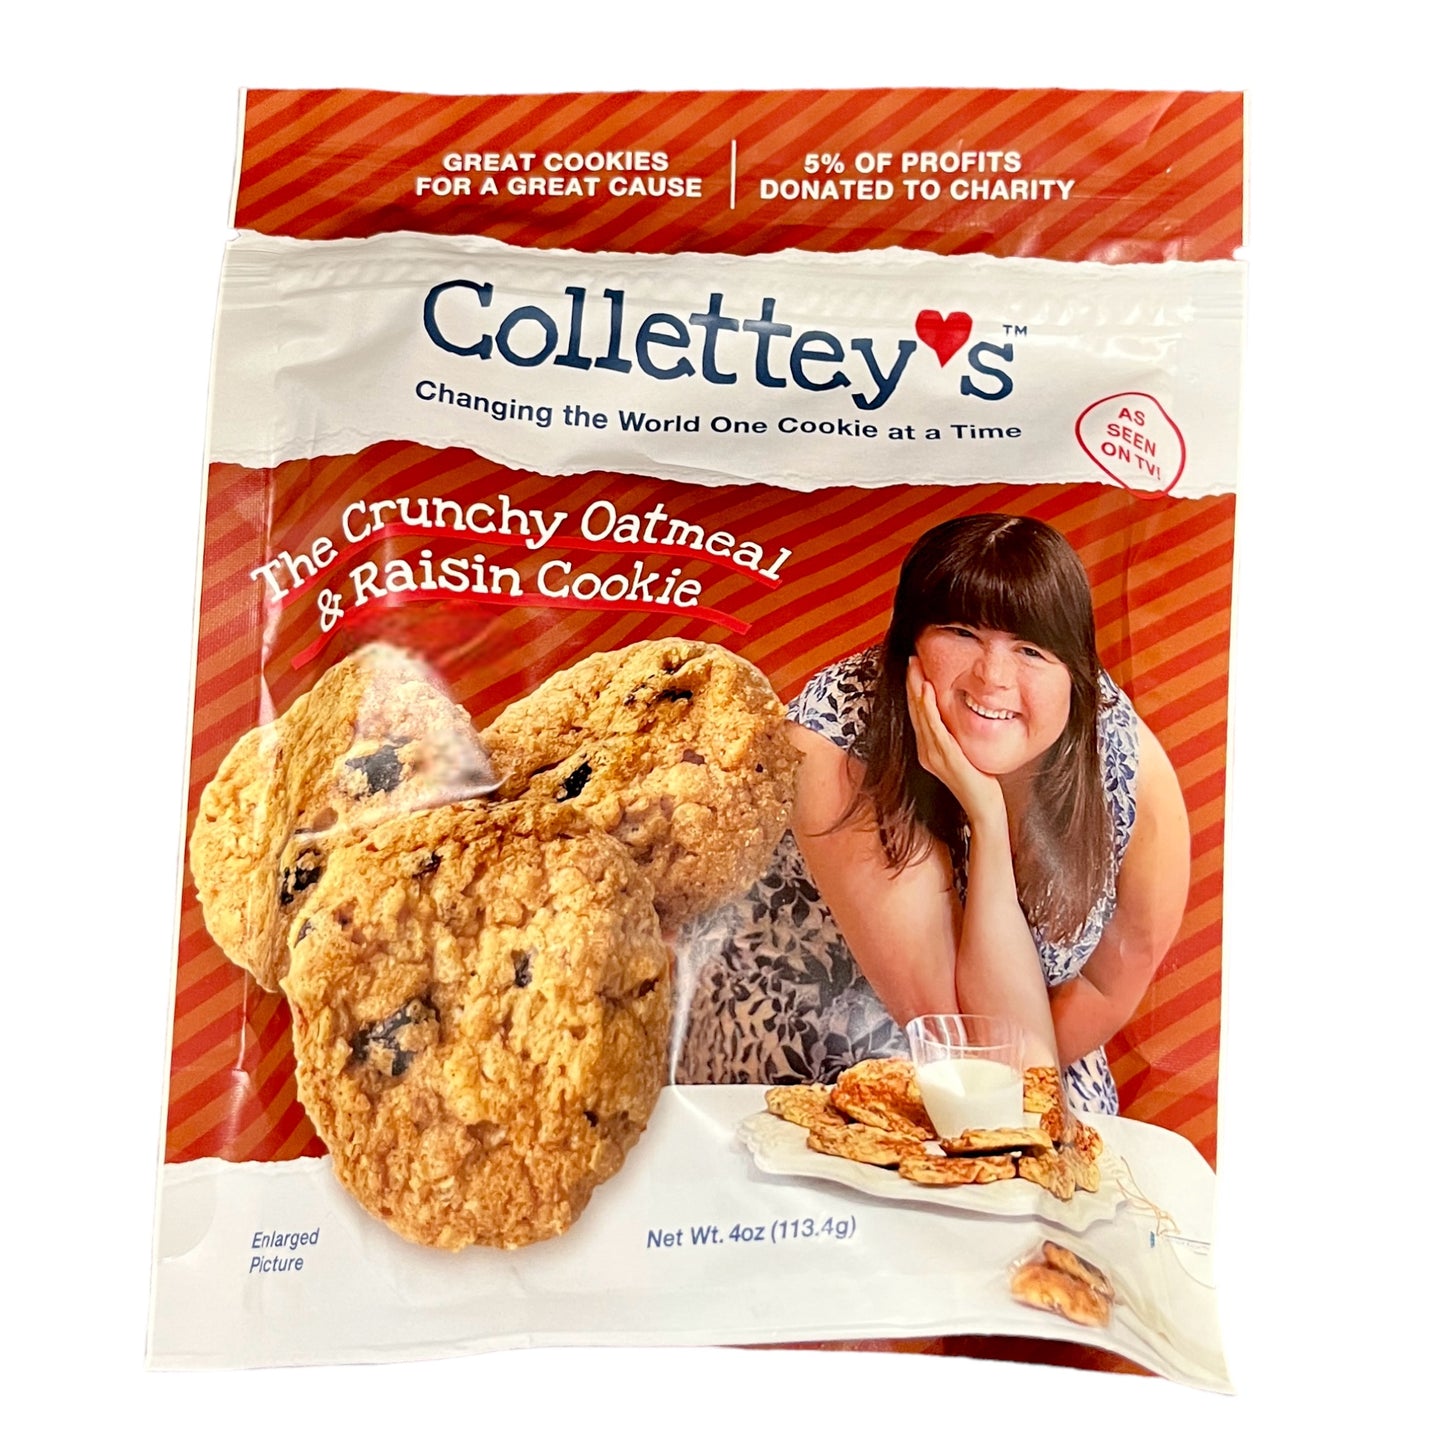 Collettey's crunchy oatmeal raisin cookies